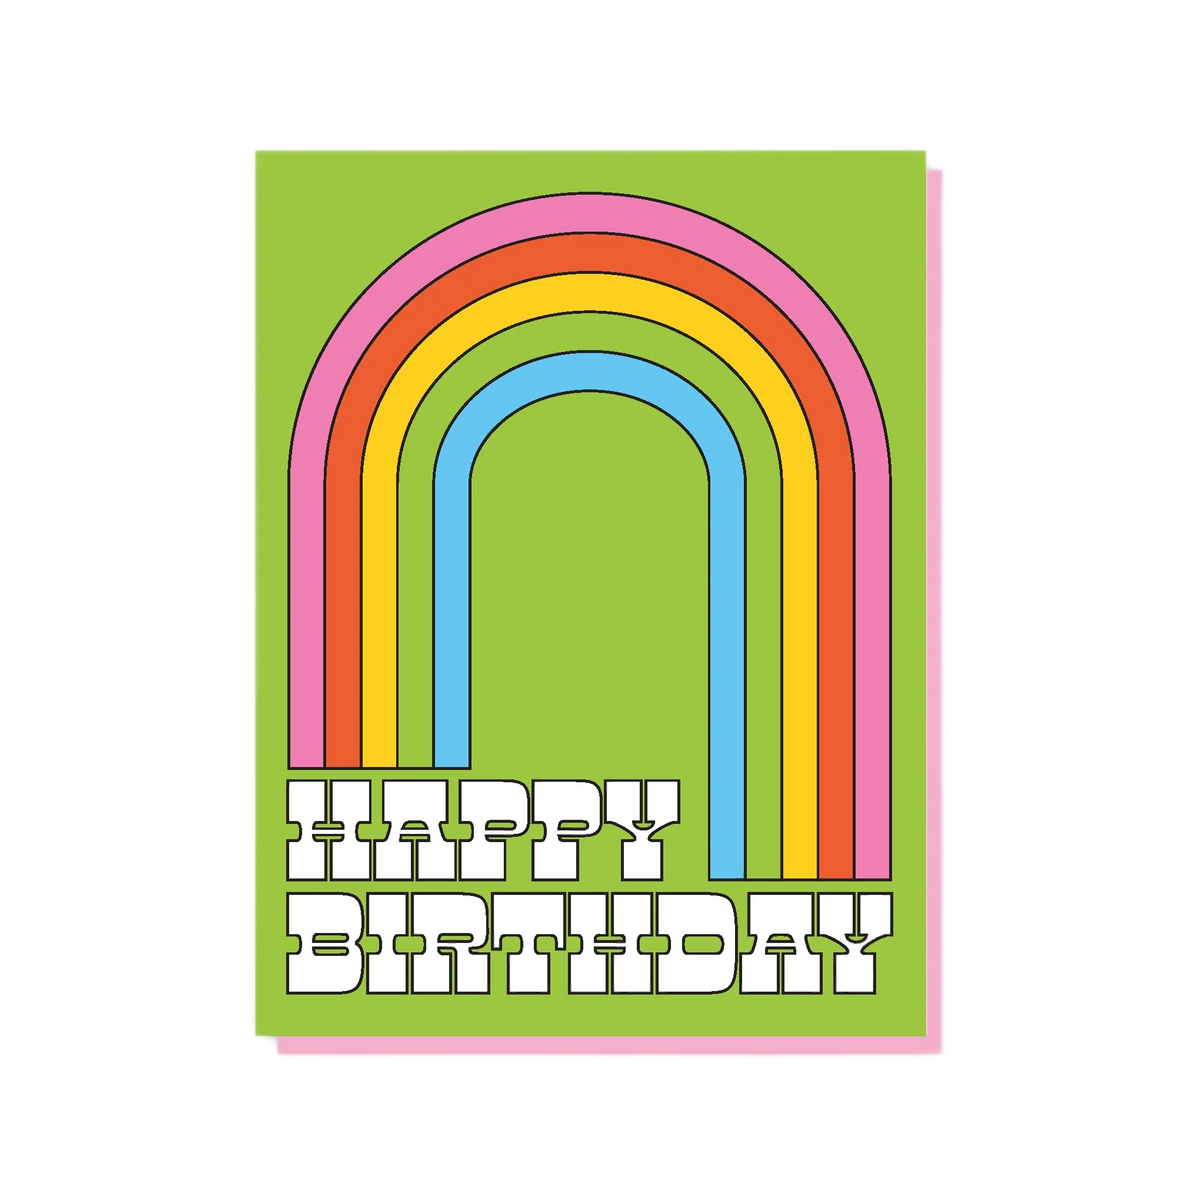 Happy Birthday Rainbow Card